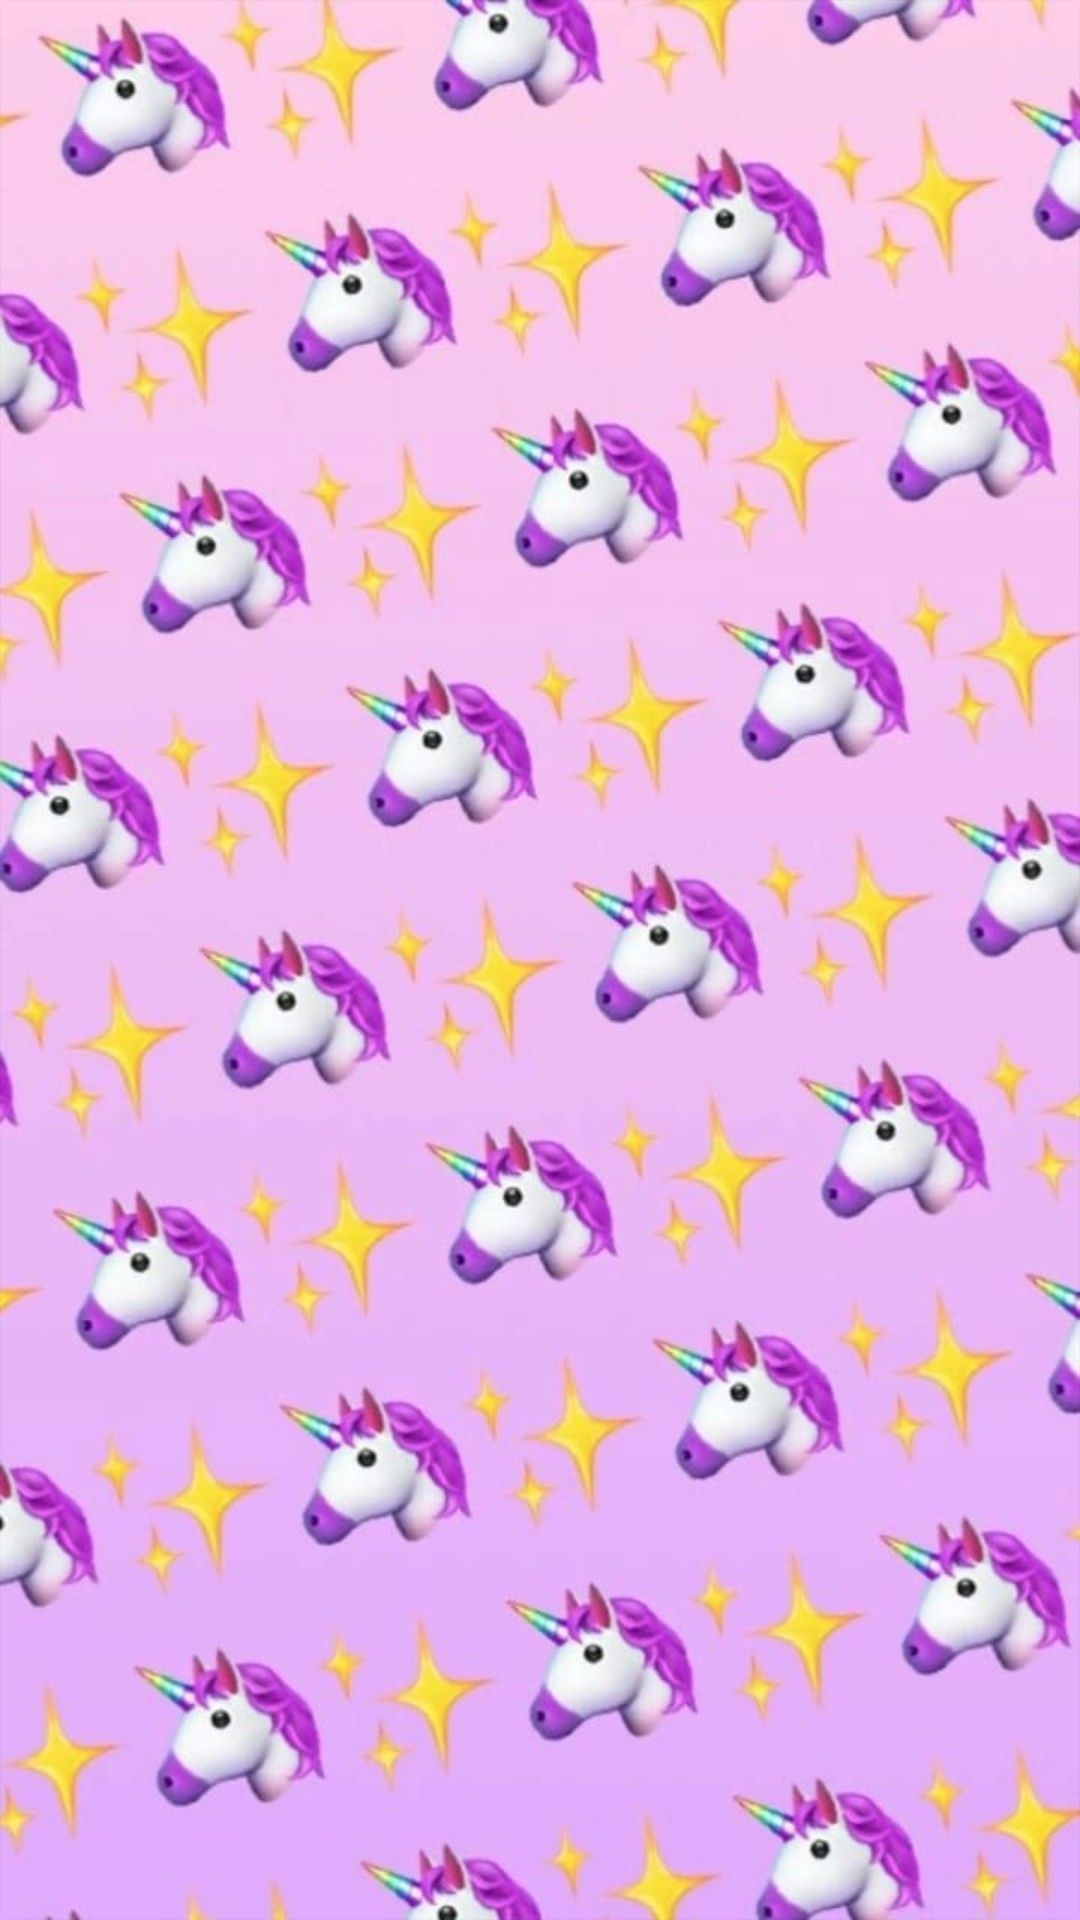 Unicorn Emoji Wallpaper iPhonewalpaperlist.com